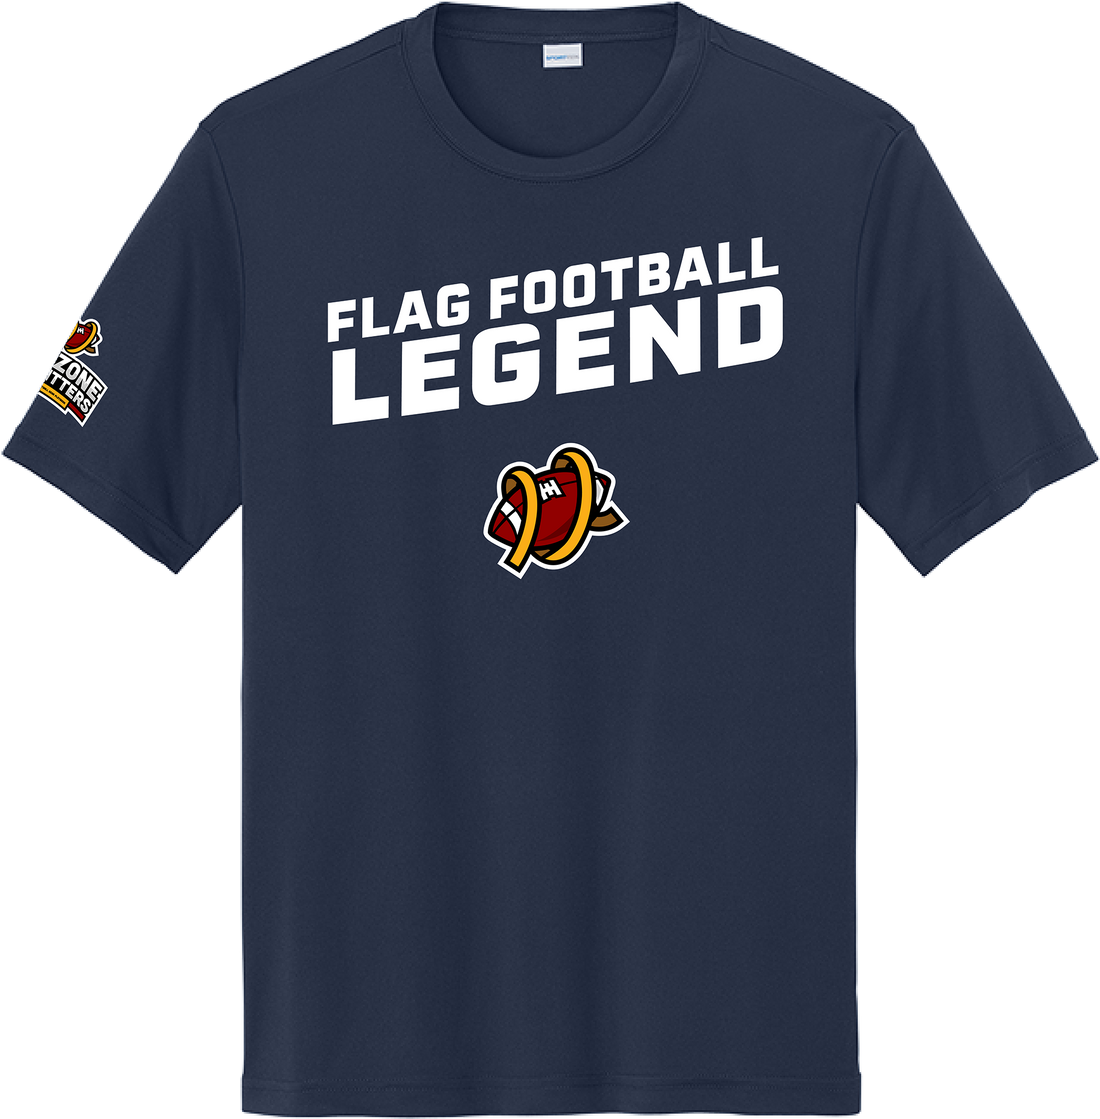 Flag Football Legend - Youth Short Sleeve Shirt